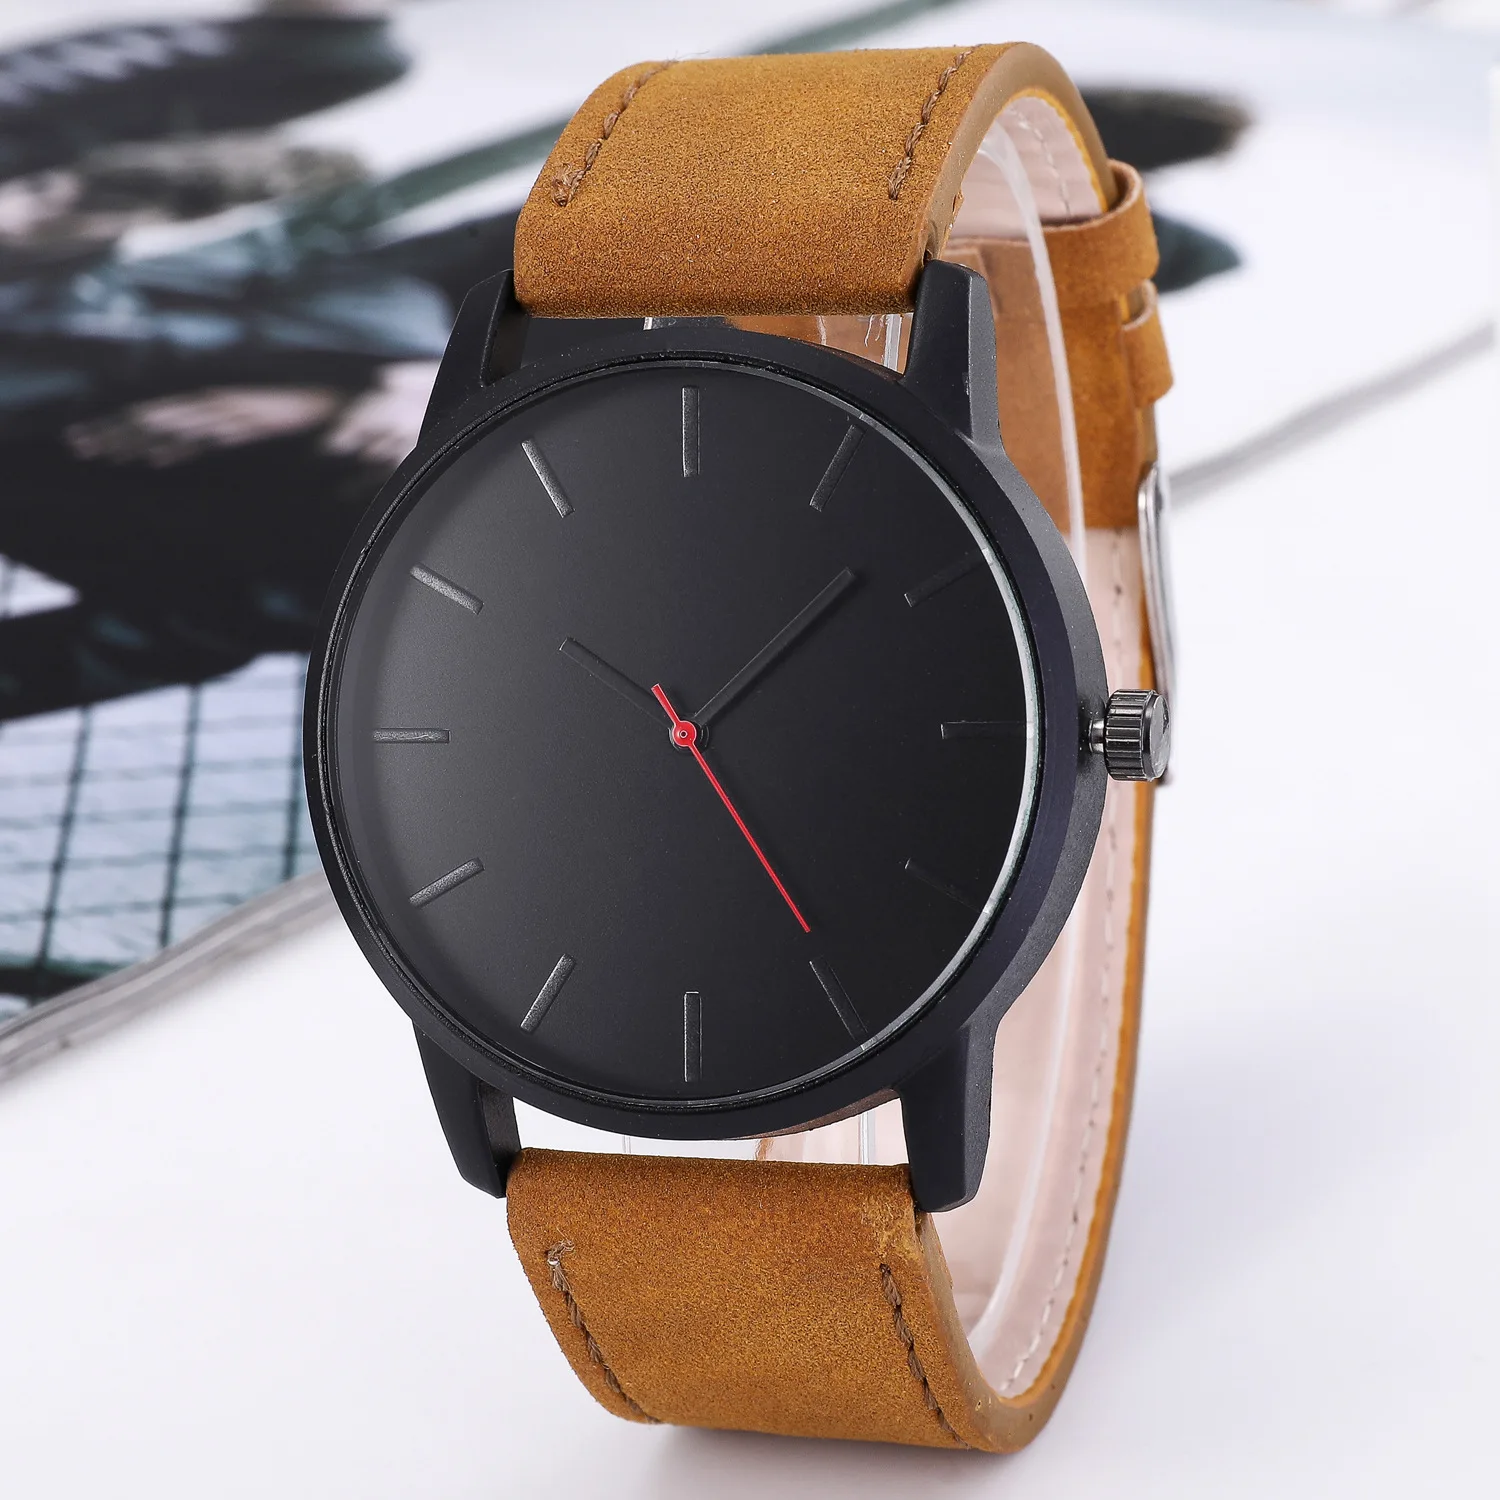 

SMVPHigh-grade fashionable and casual men's watch fashion business quartz watch abrasive leather belt Watch064